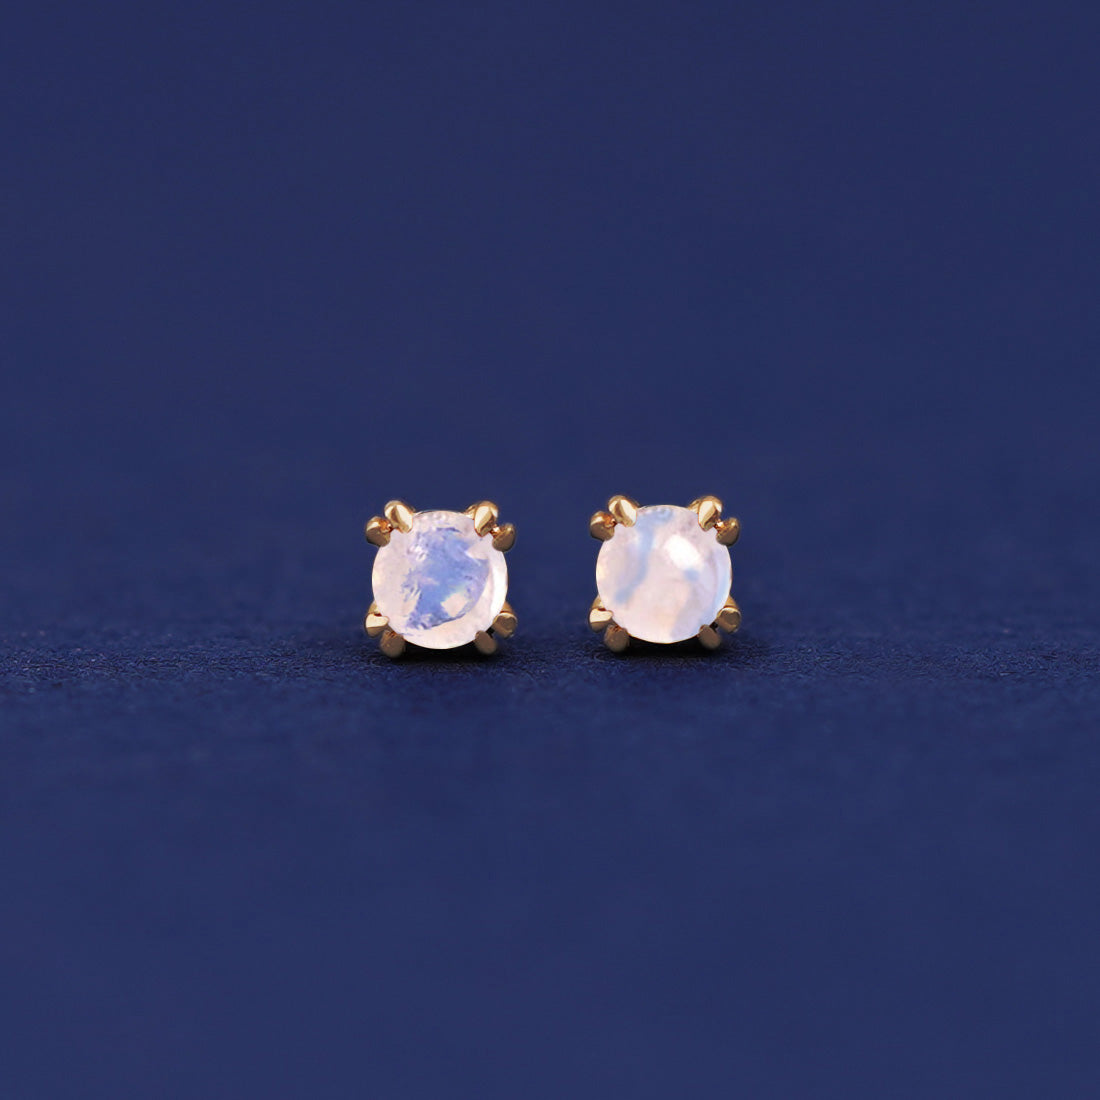 A pair of 14 karat gold studs earrings with 3 millimeter round Moonstone gemstones